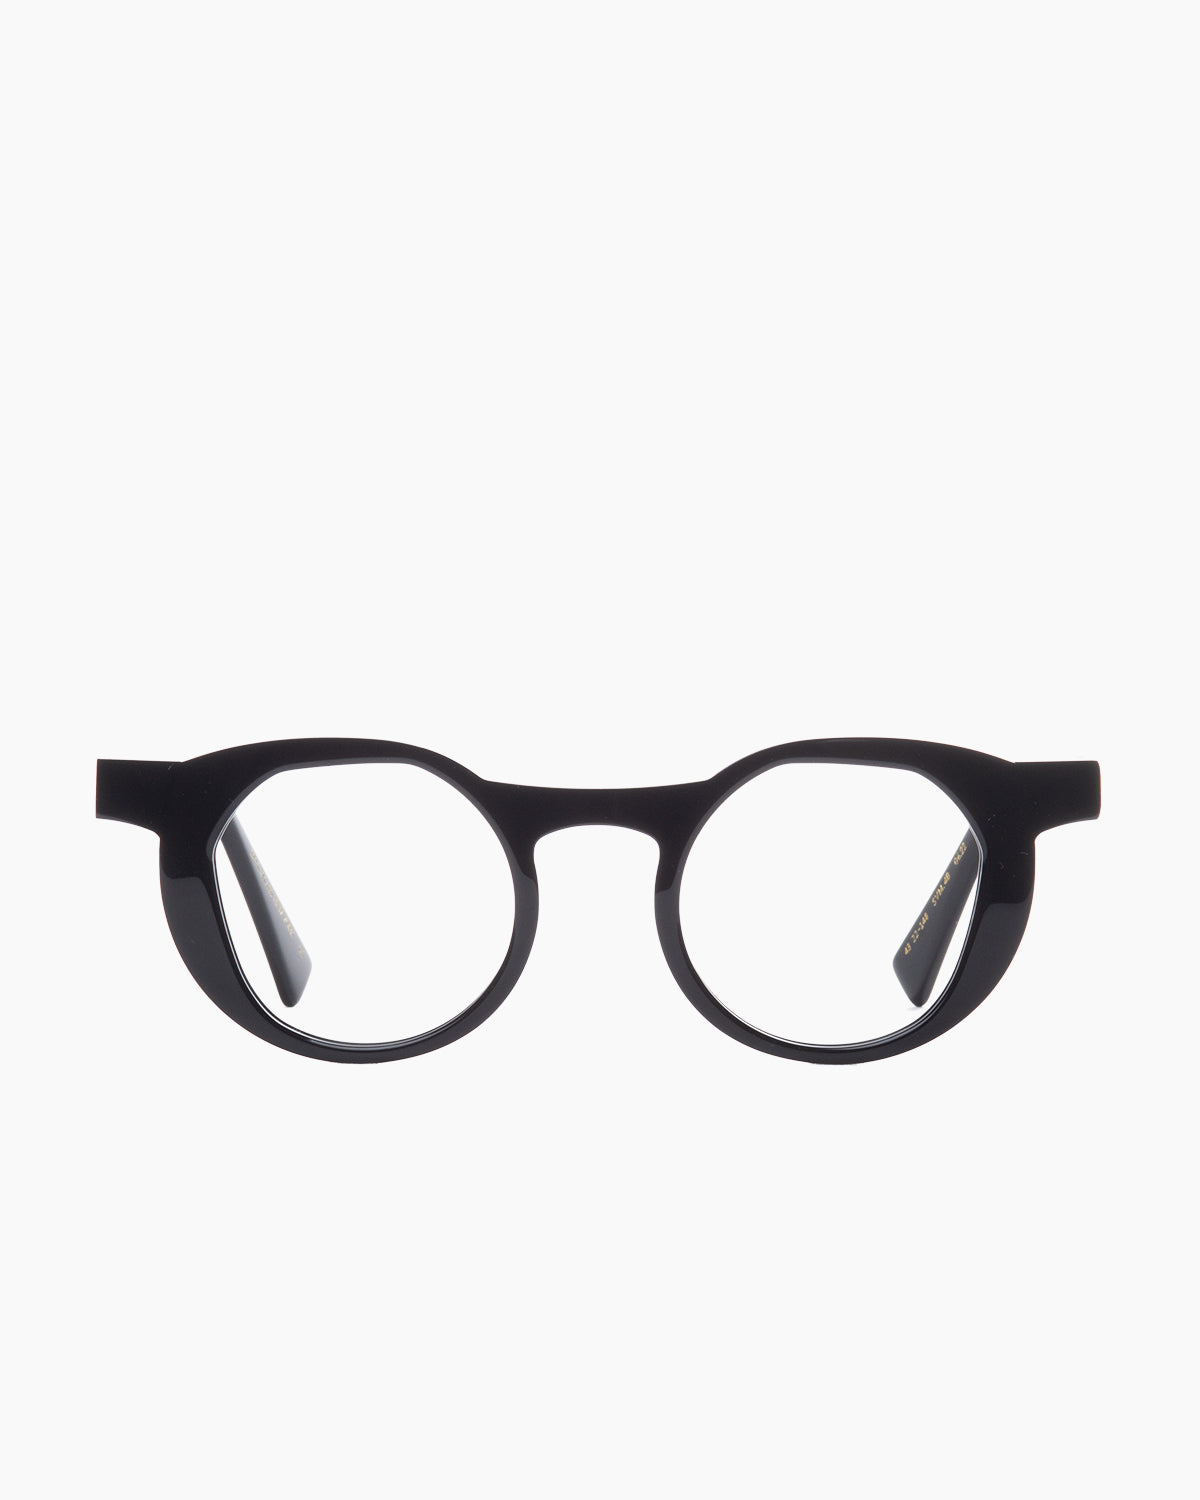 Gamine - Savamala - Black | Bar à lunettes:  Marie-Sophie Dion